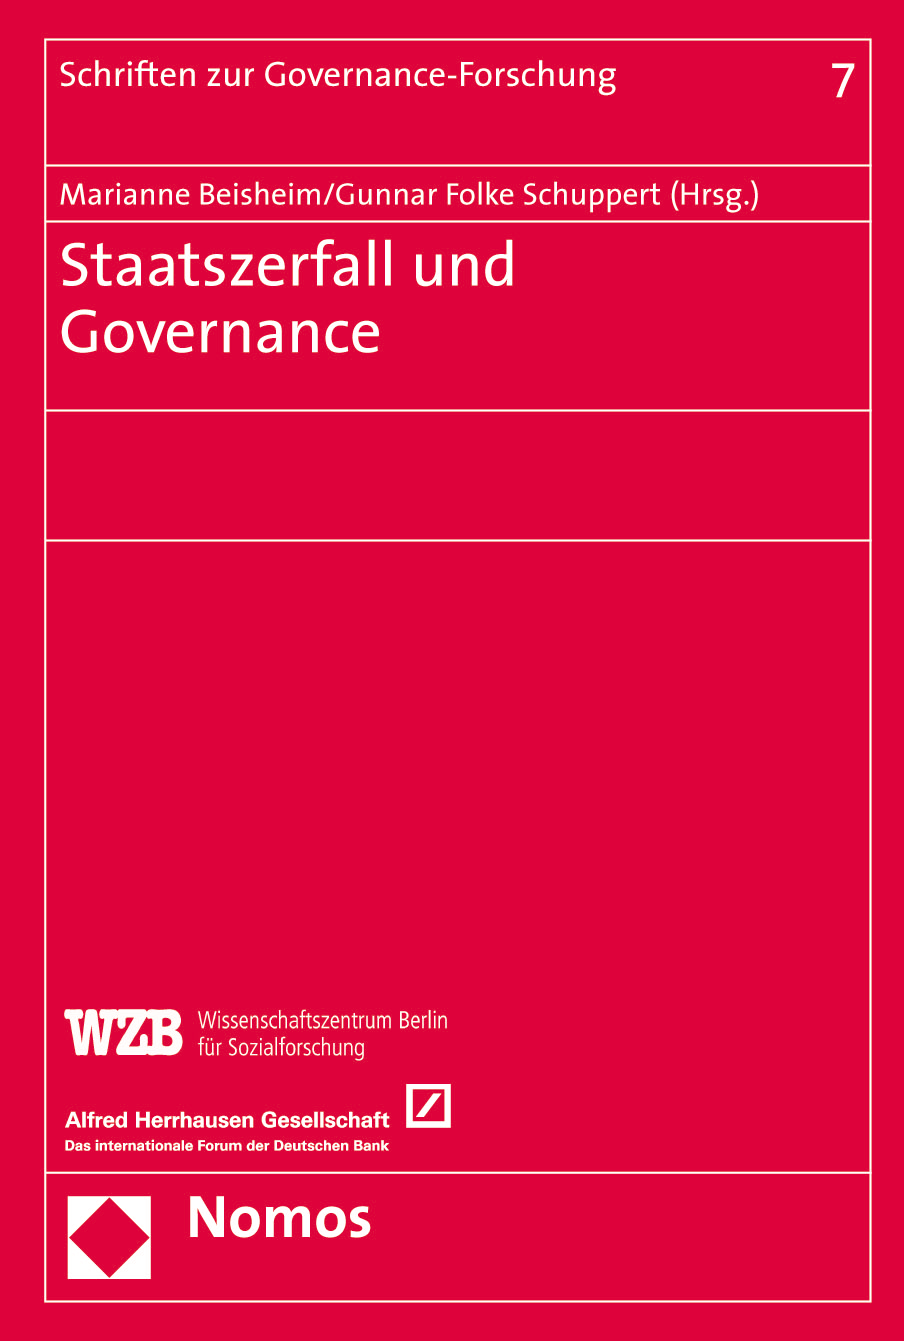 Risse_Staatszerfall und Governance